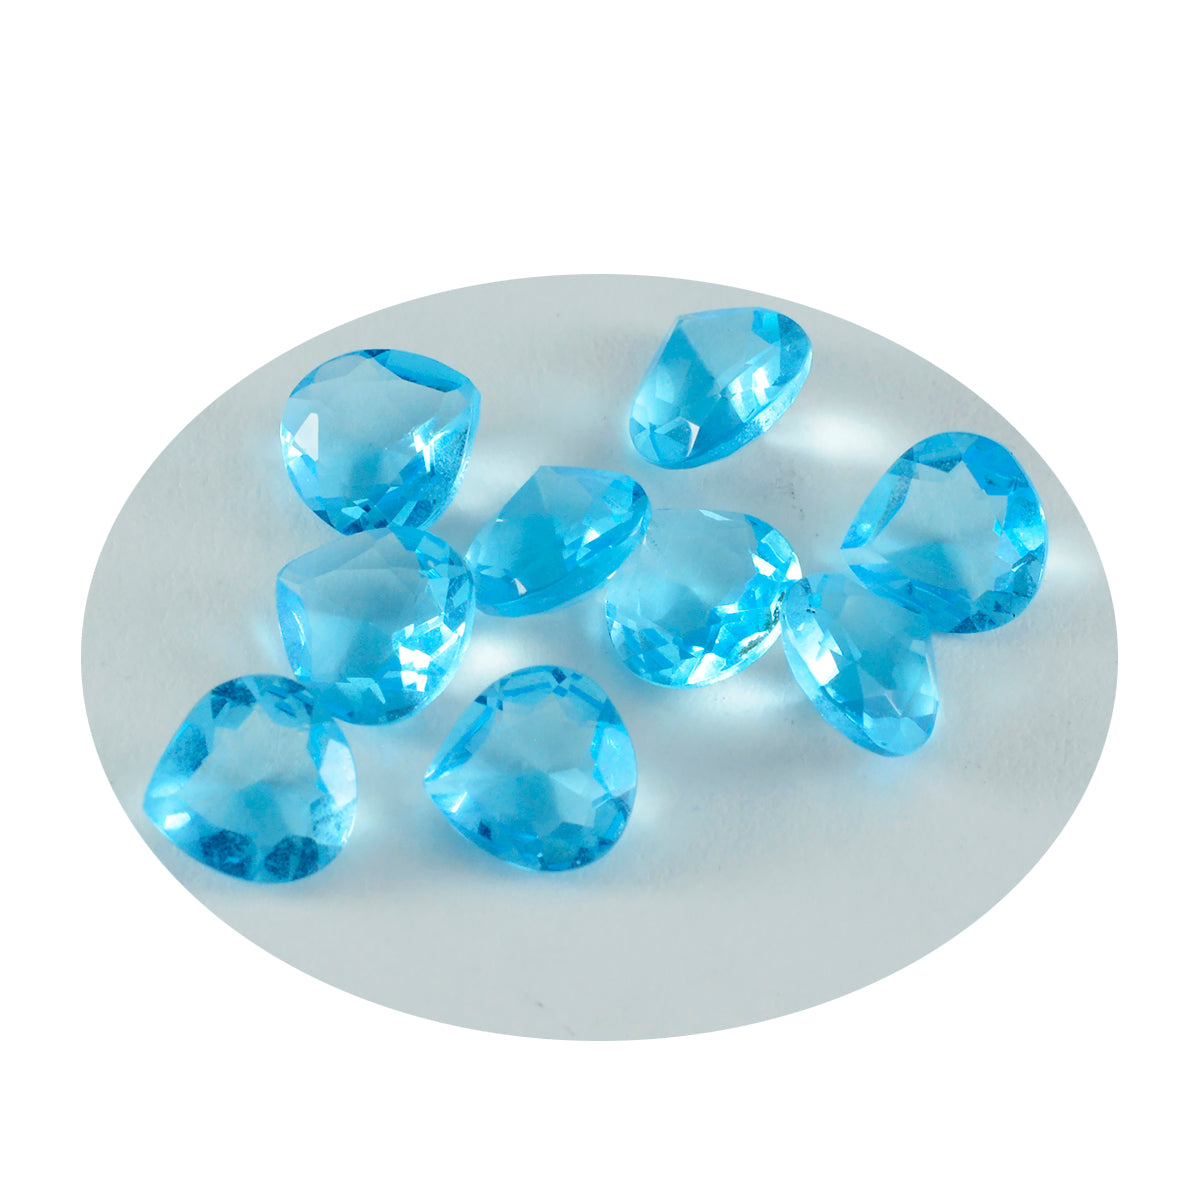 Riyogems 1PC Blue Topaz CZ Faceted 4x4 mm Heart Shape handsome Quality Gems